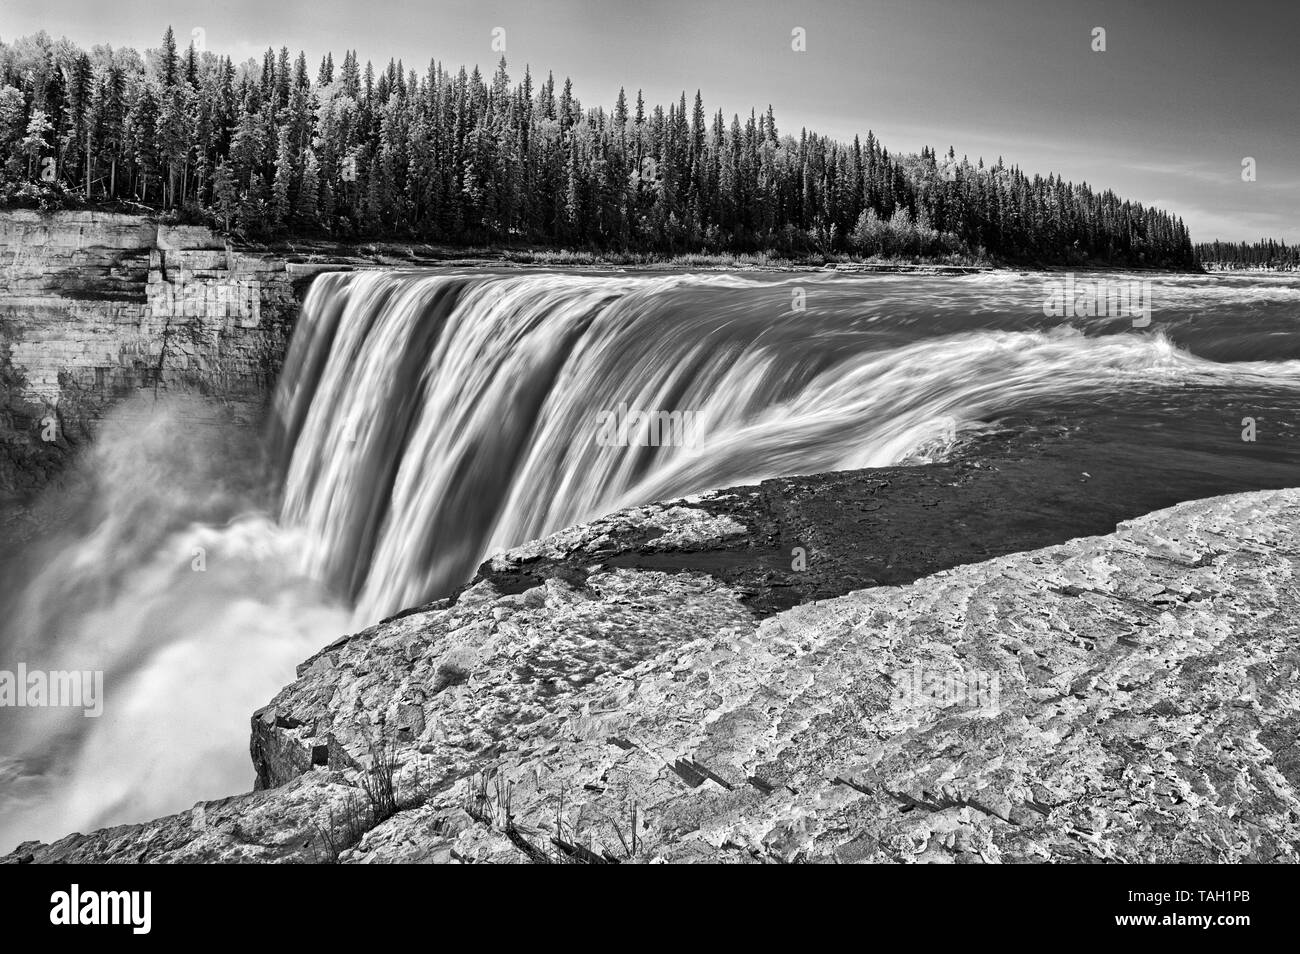 Heno en Alexandra River Falls Twin Falls Gorge Parque territorial de los Territorios del Noroeste de Canadá Foto de stock